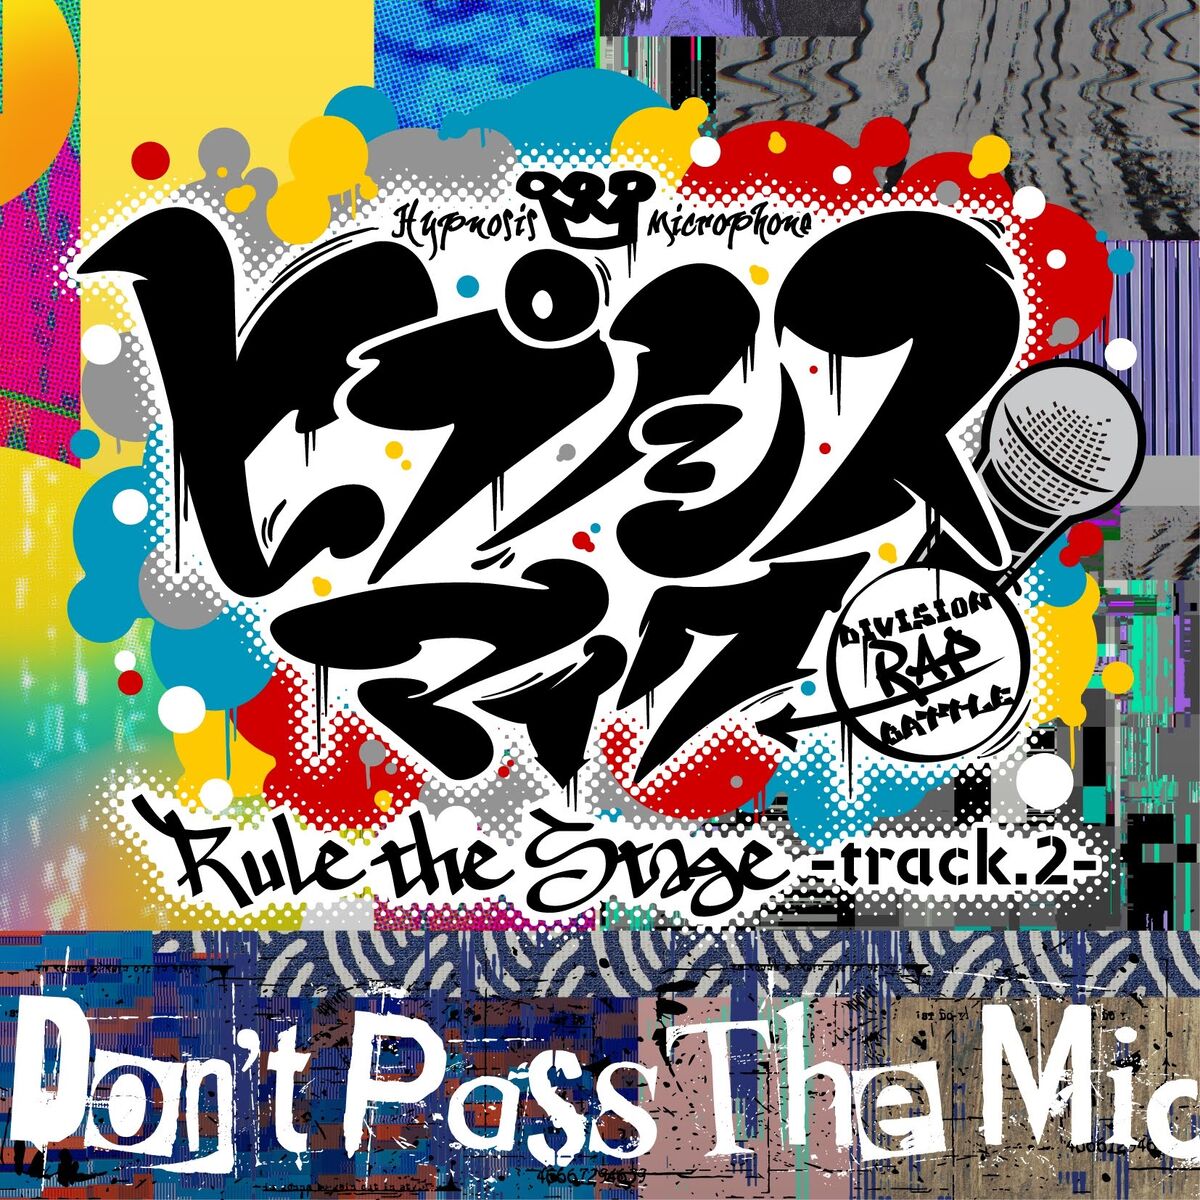 Gangsta's paradise lyrics poster, Old school hip hop lyrics wall art